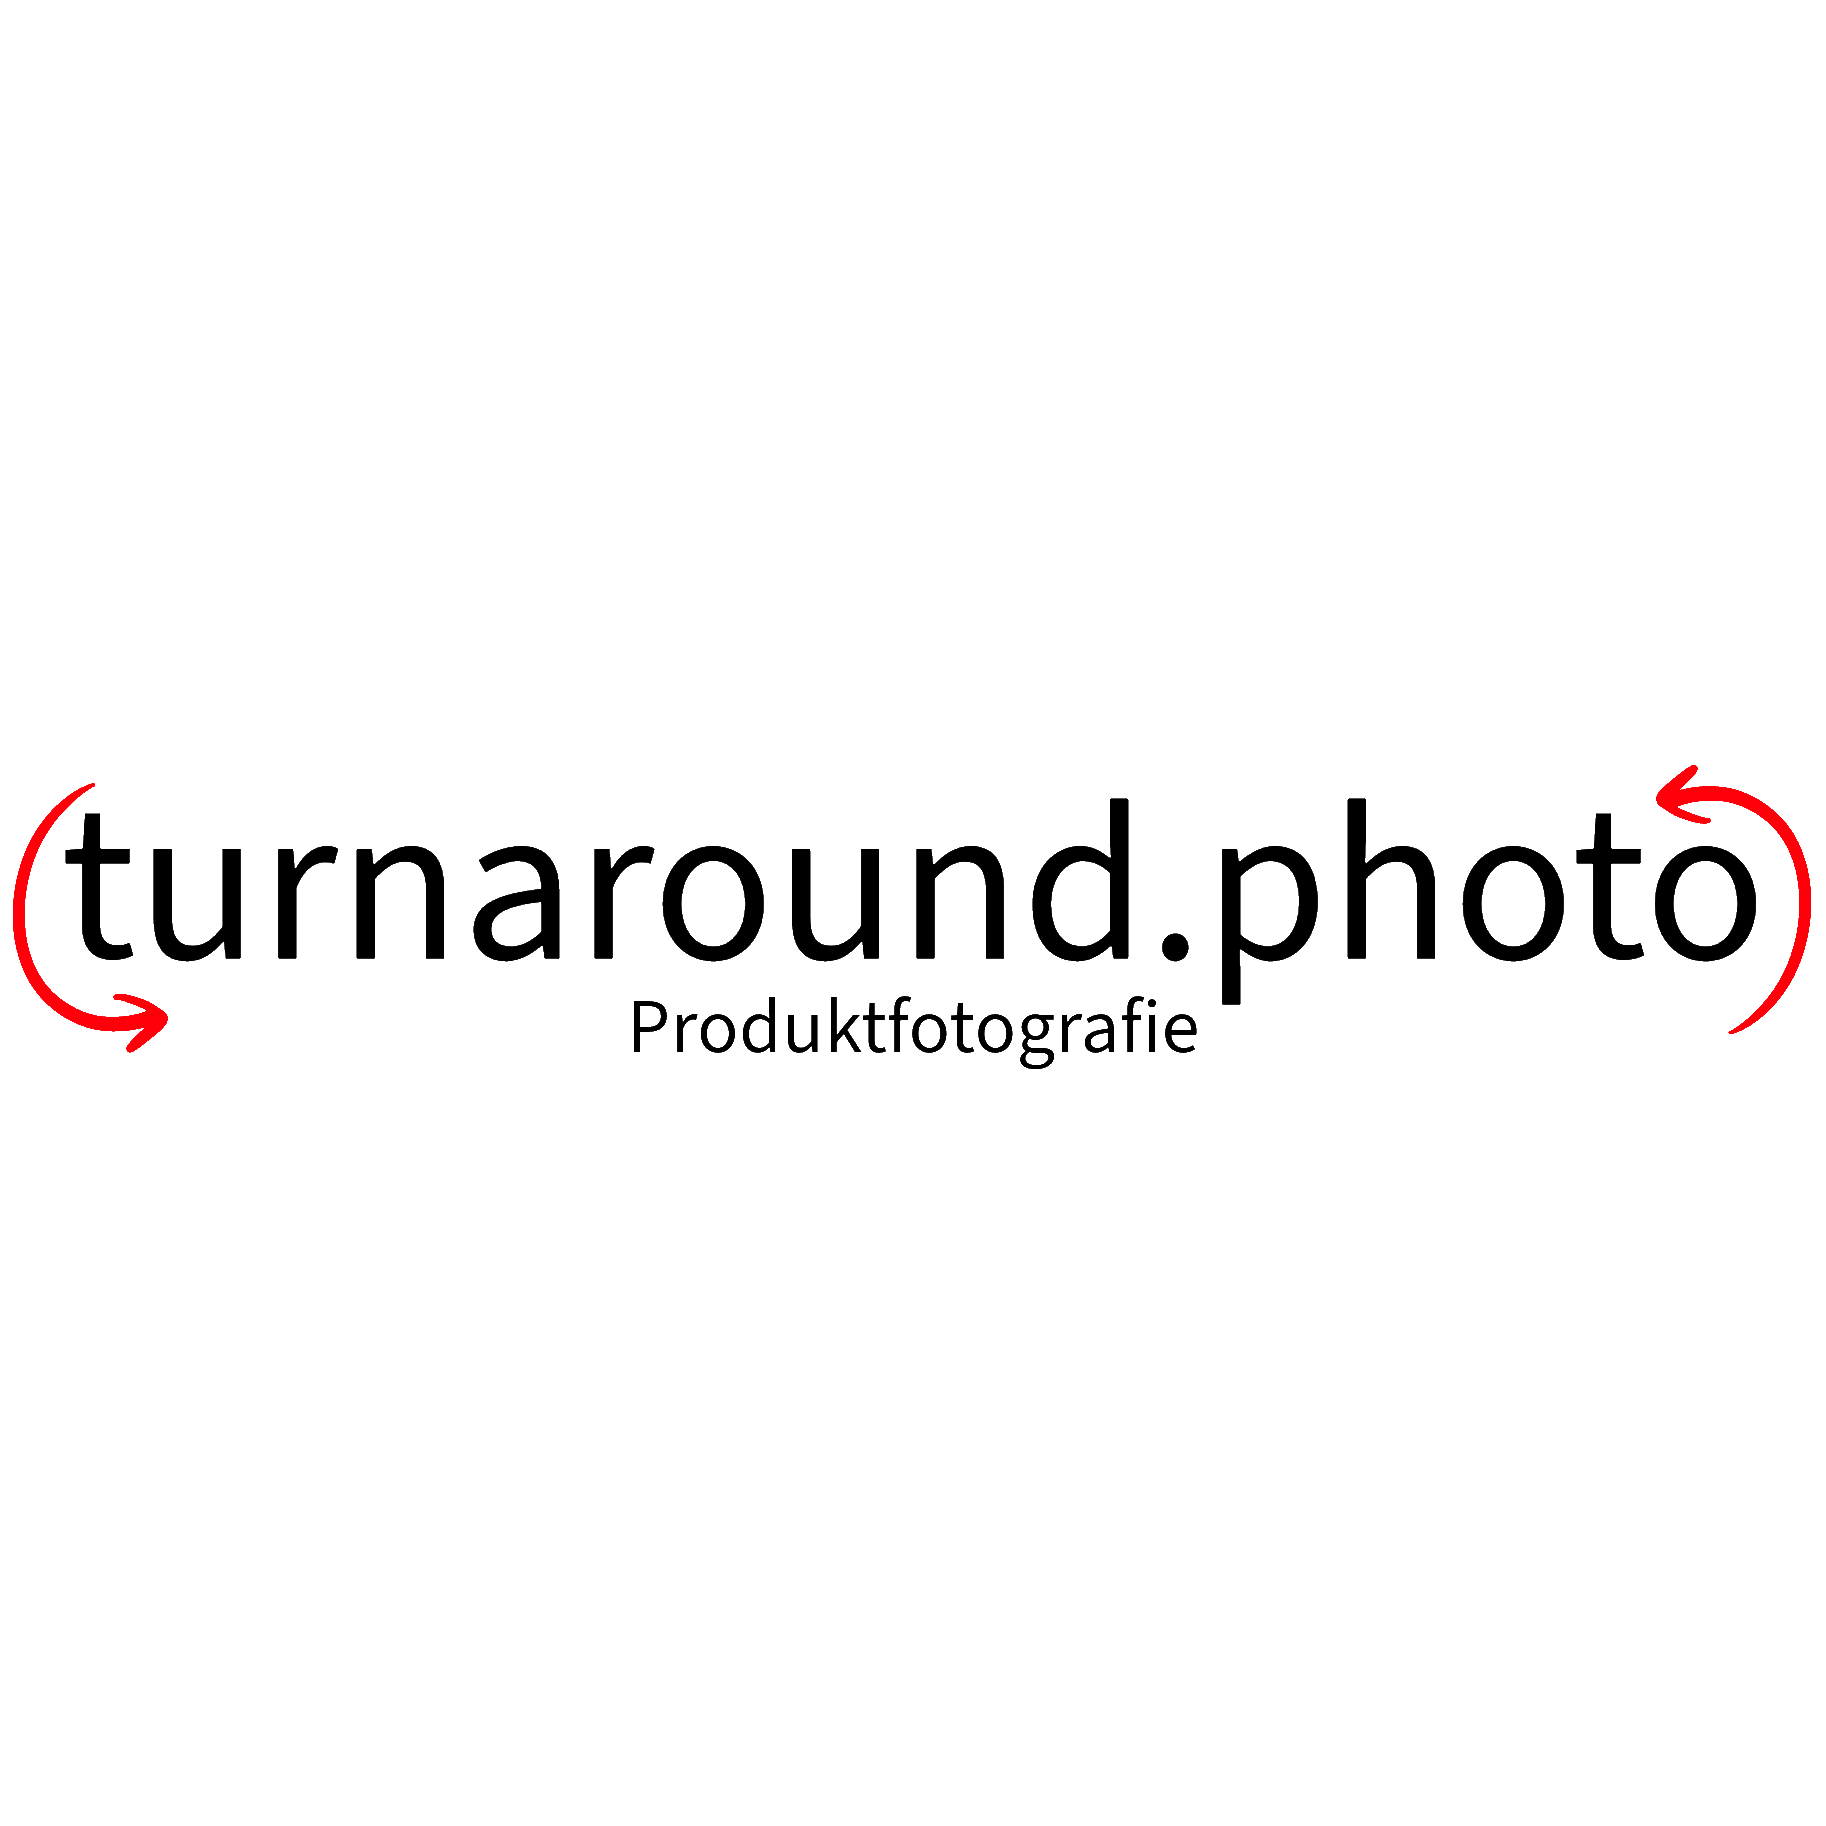 turnaround.photo Logo